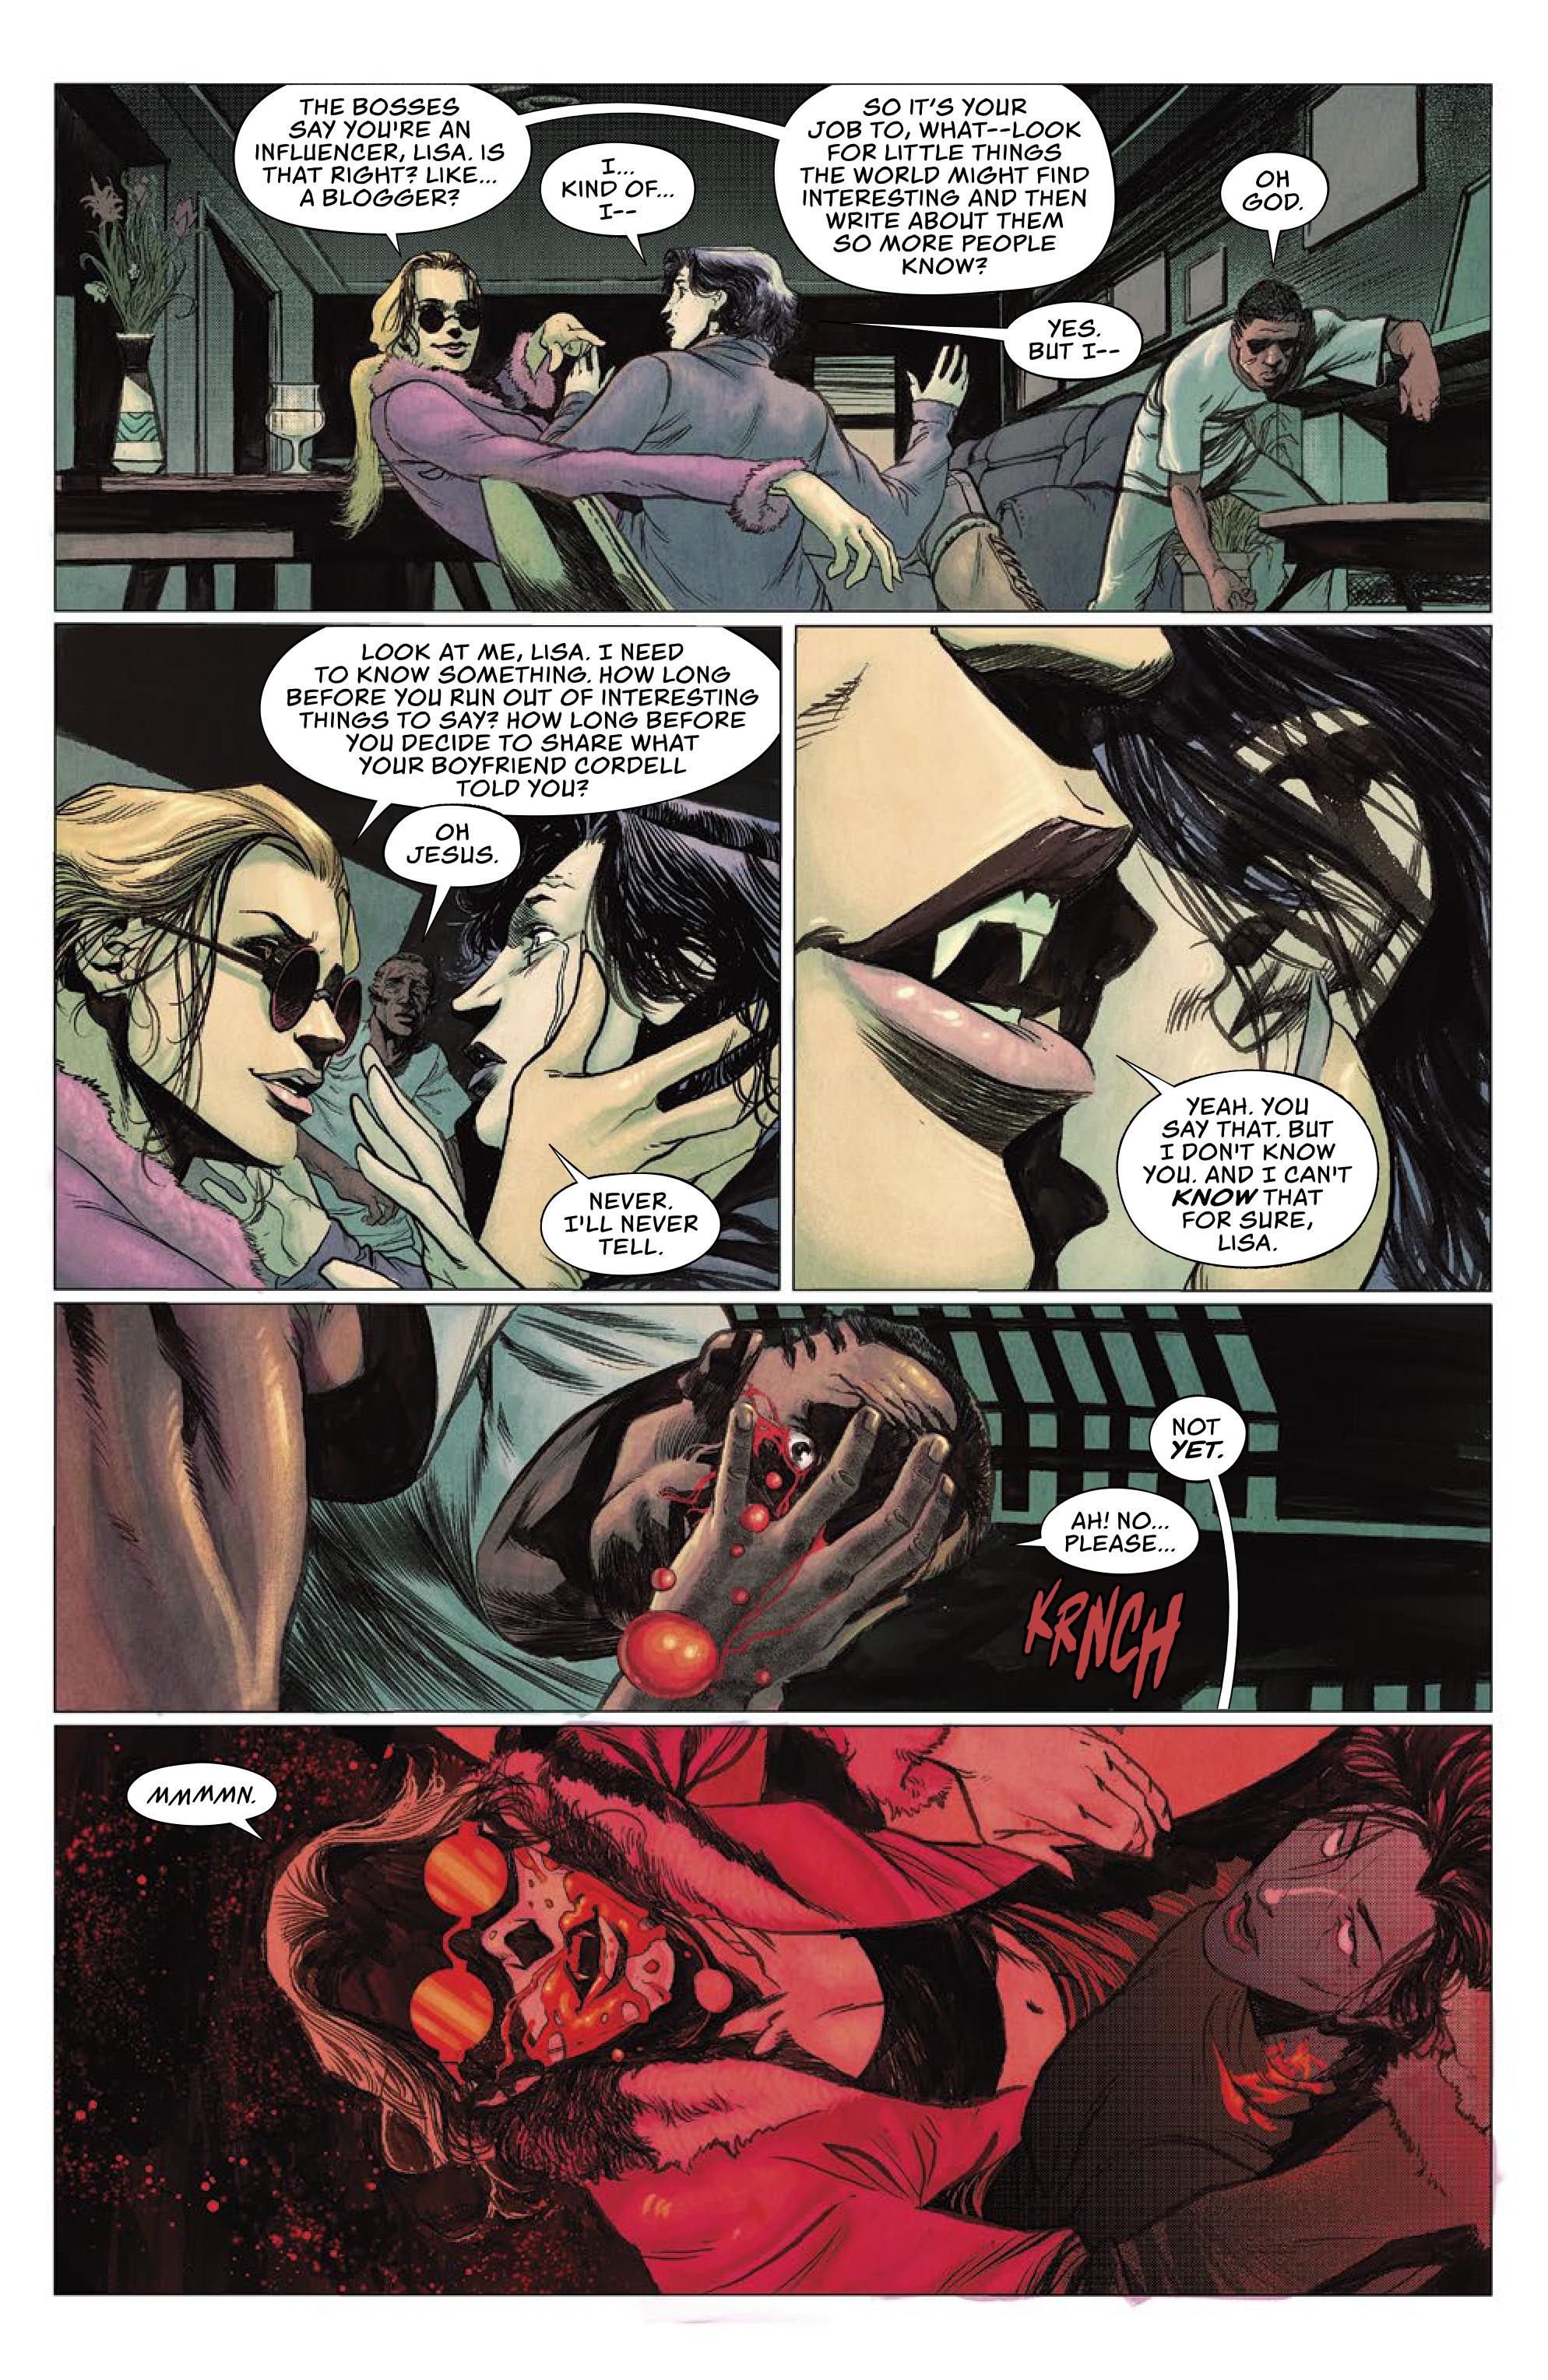 Vampire: The Masquerade #1 preview